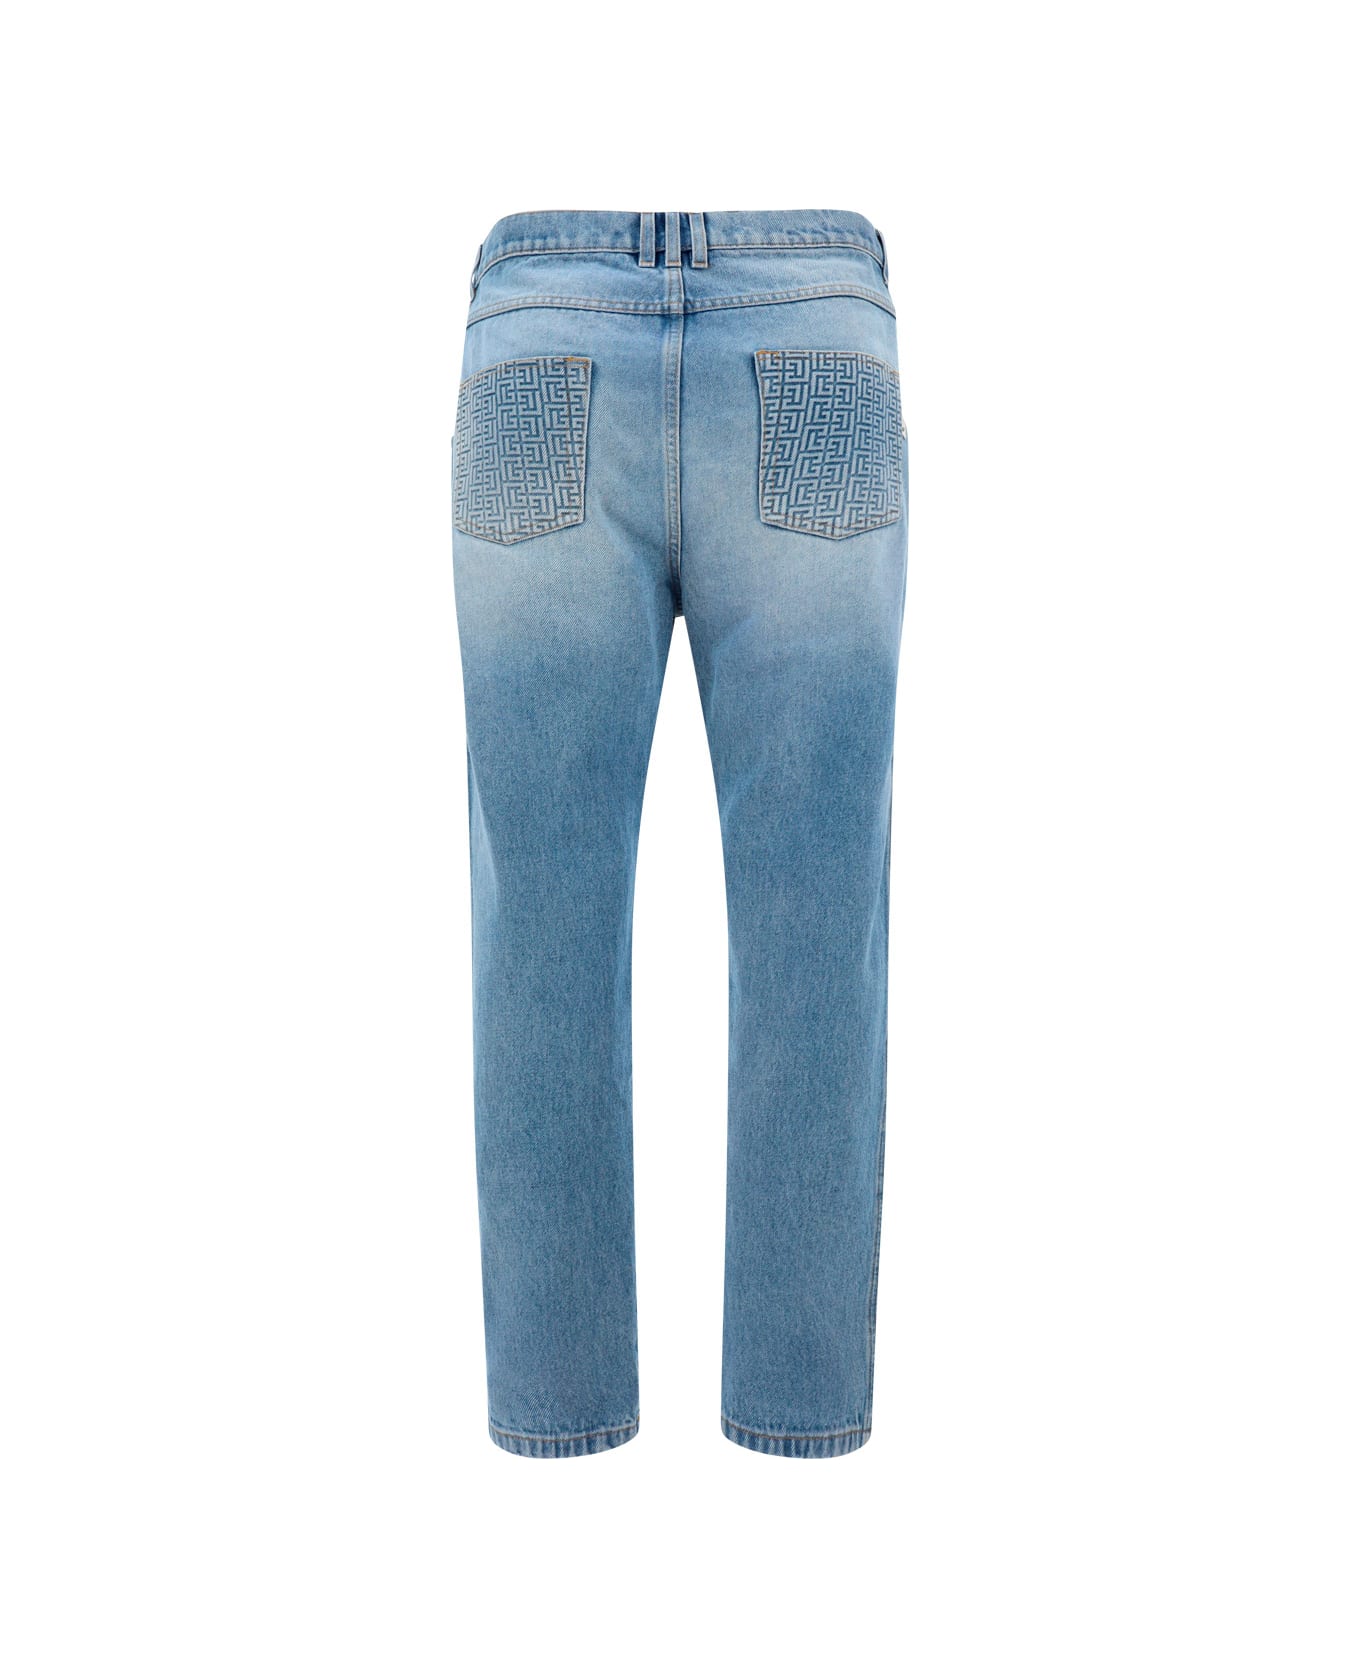 Balmain Jeans - Bleu Jean デニム